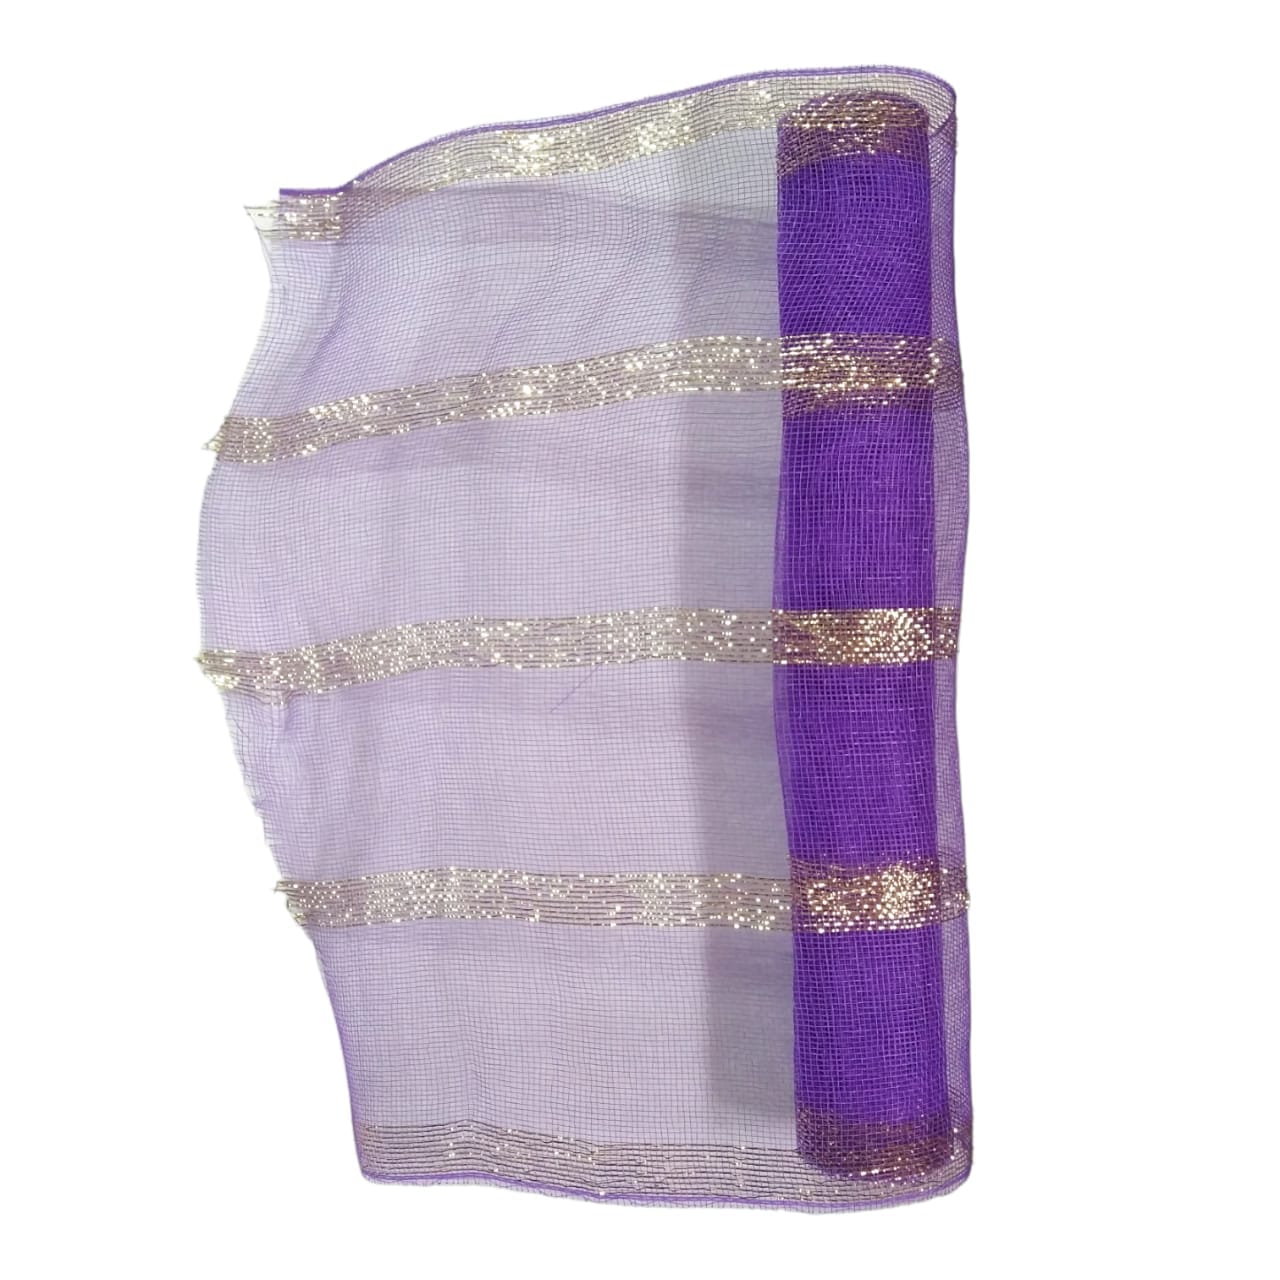 Craftdev Decoration Supplies Purple Organza Fabric Roll - 45cmx4m, Pack of 1